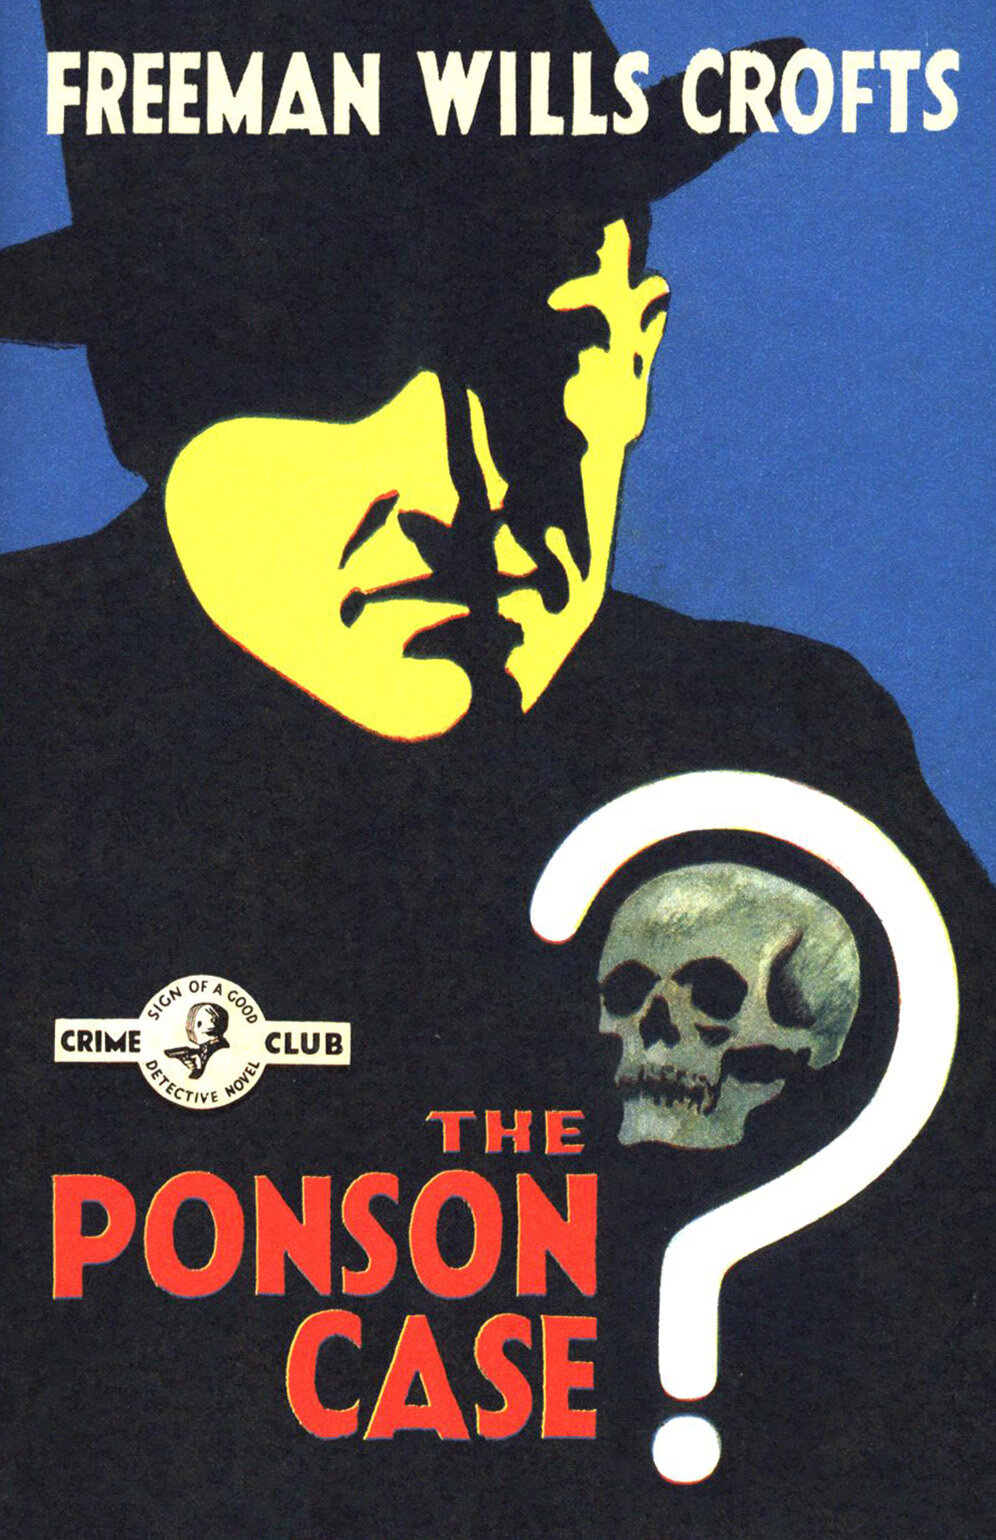 The Ponson Case (Wills Crofts Freeman) - фото №1